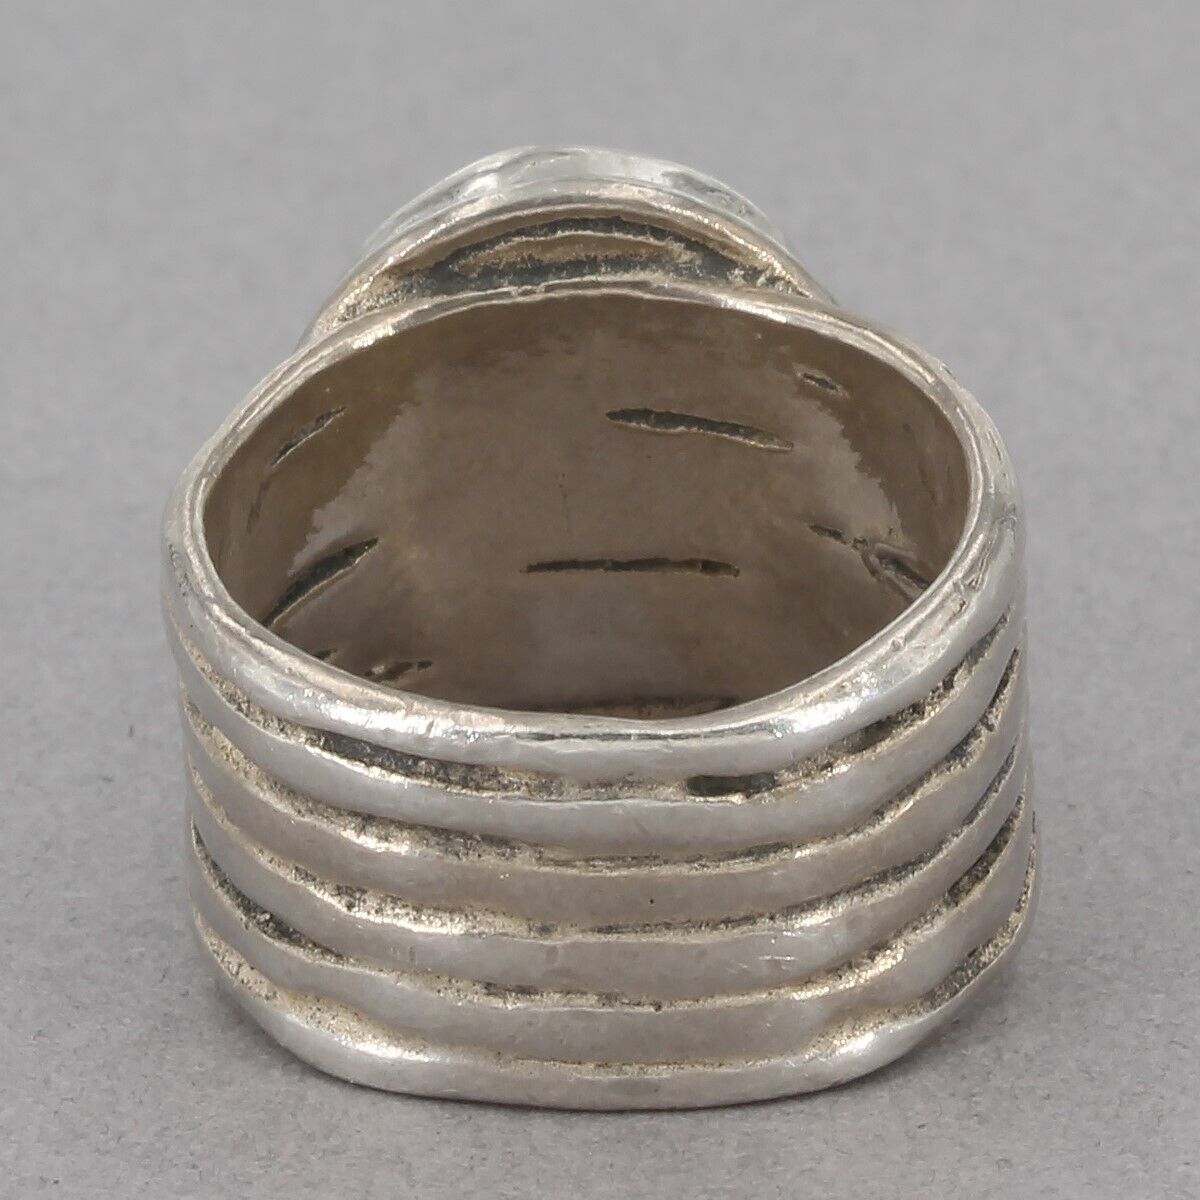 Retired Silpada Oxidized Sterling Silver Green Glass DAINTREE Ring R1463 Sz 4.75